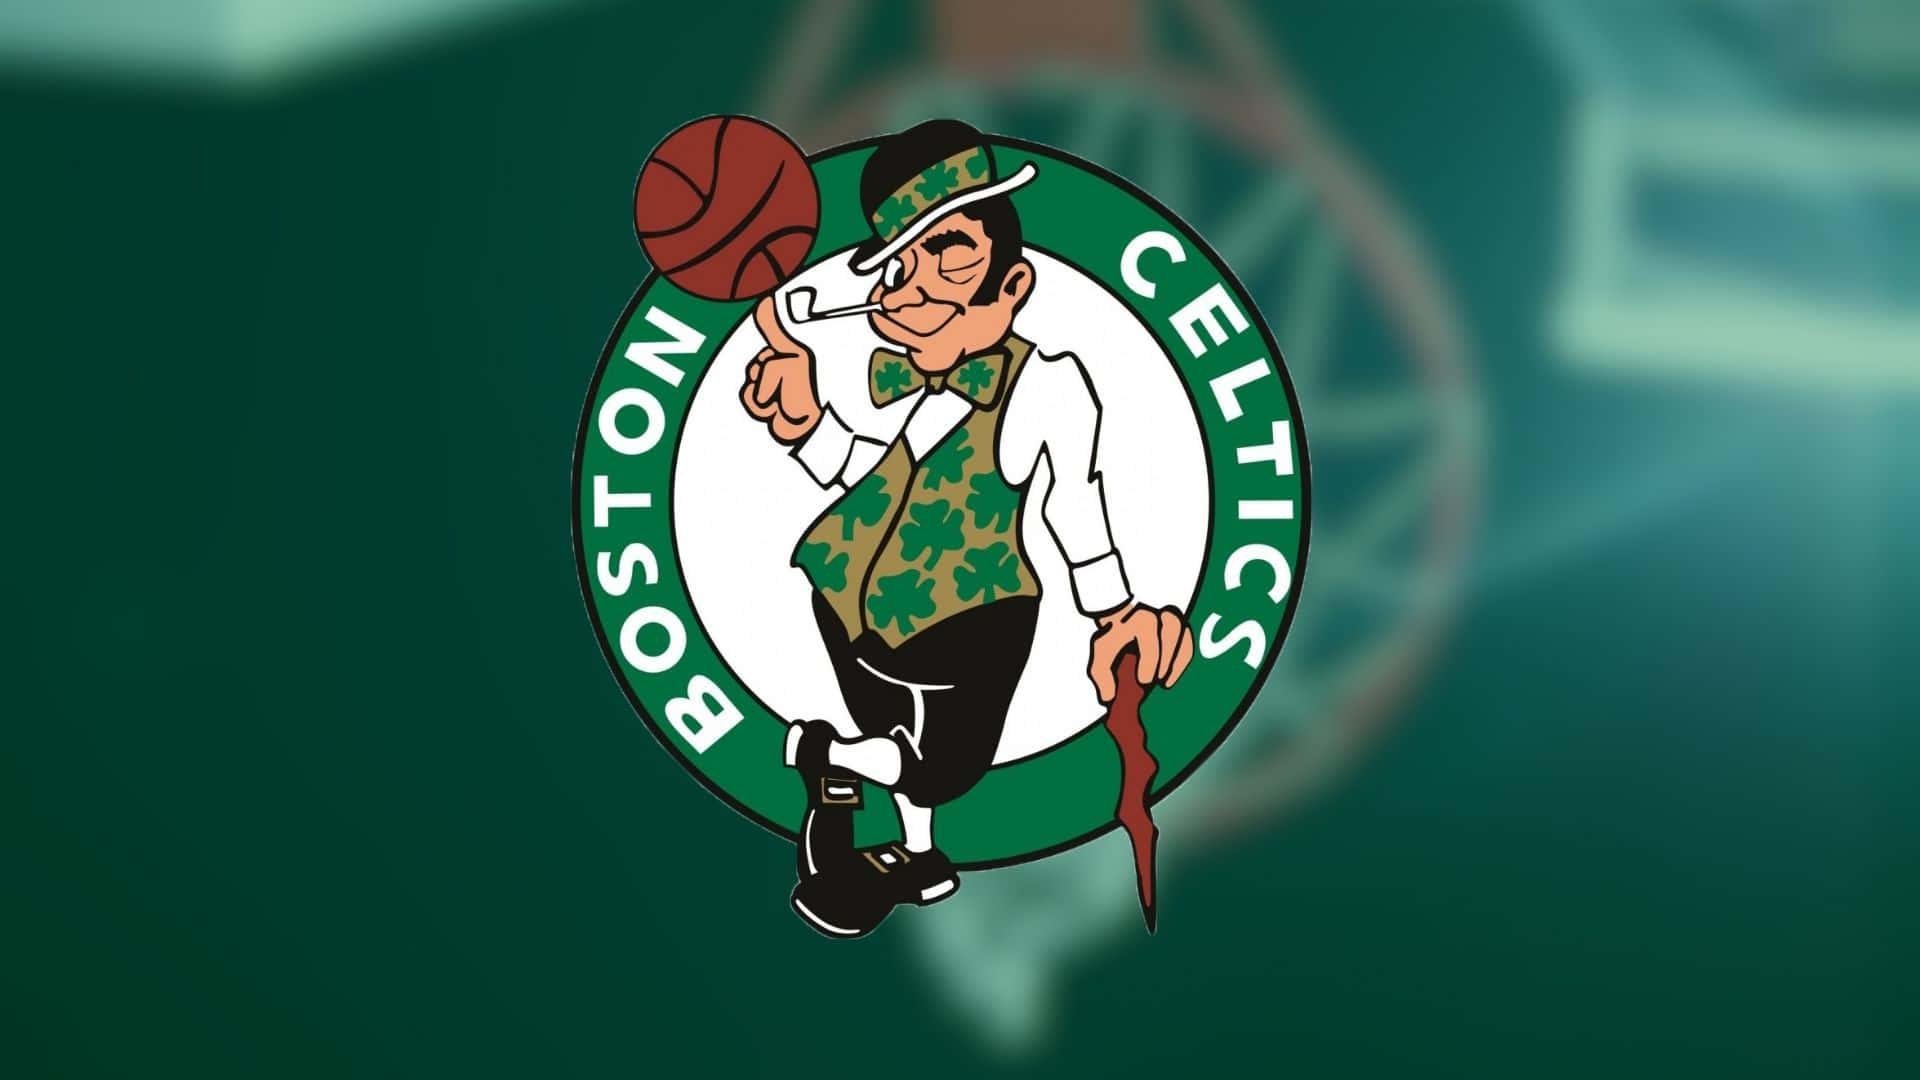 Elorgullo De Los Boston Celtics Reina Supremo. Fondo de pantalla